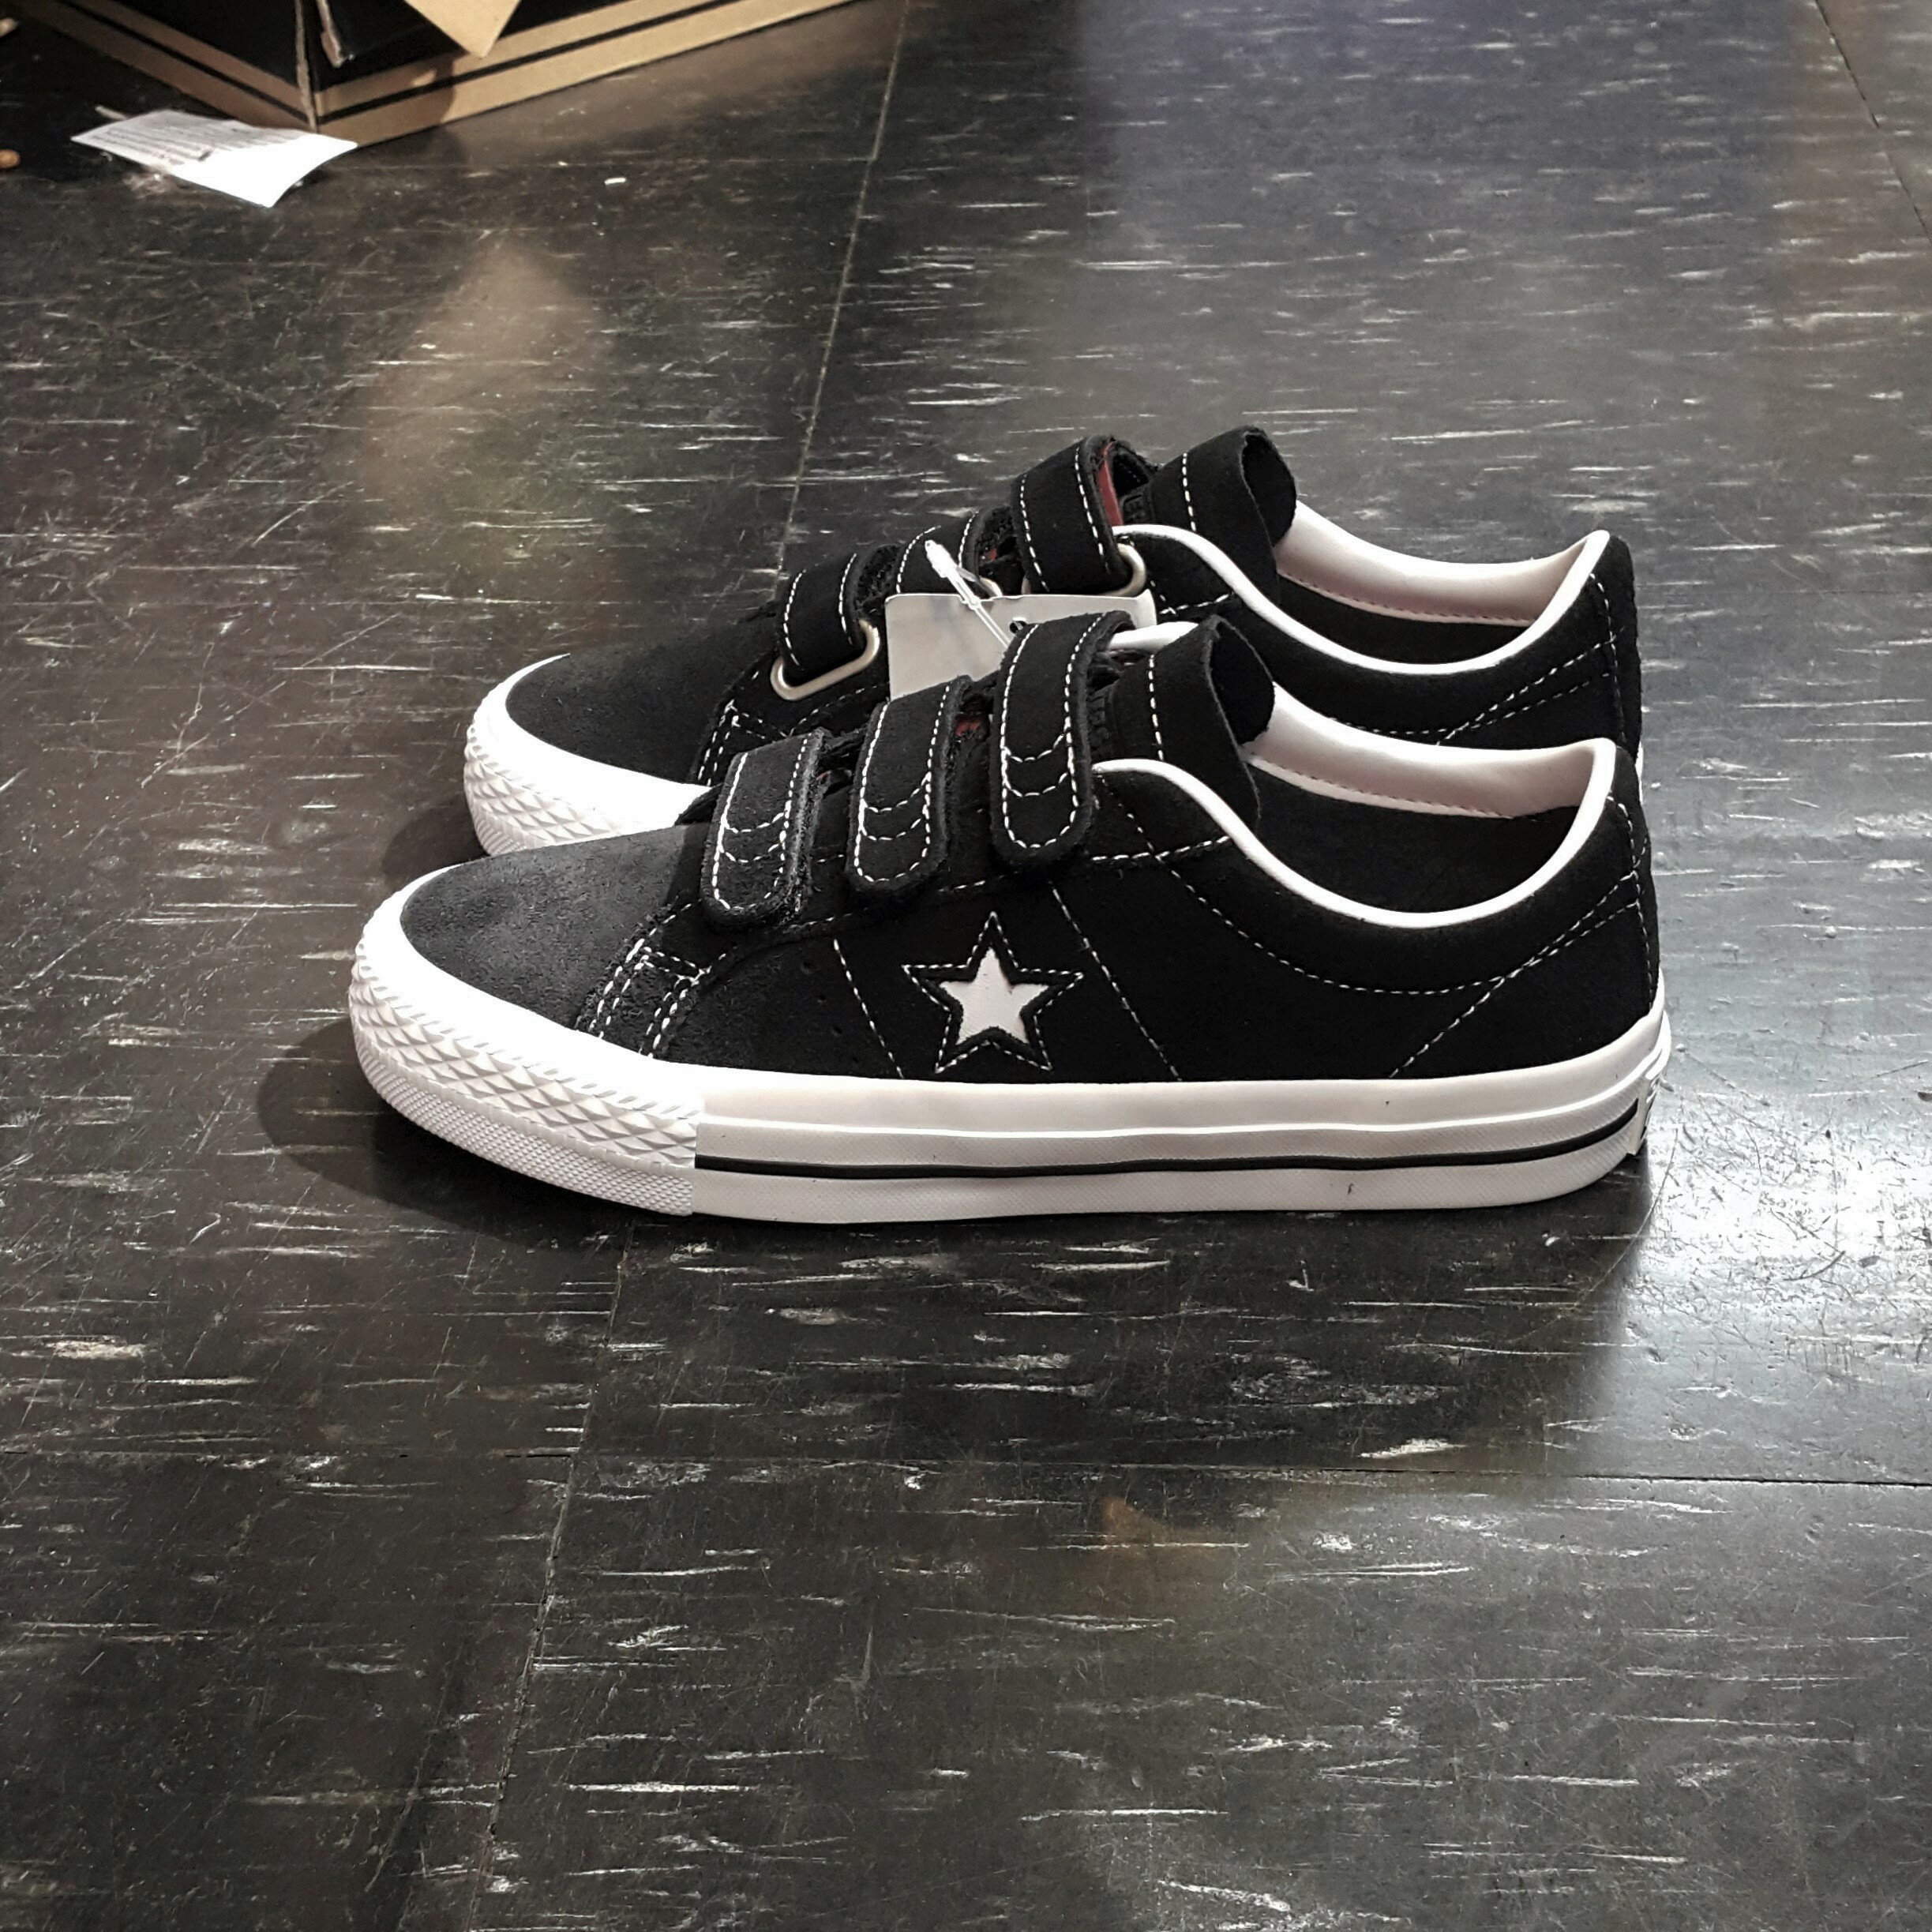 Converse One Star Pro 3V 魔鬼氈 黑色 黑白 麂皮 滑板鞋 鞋墊 星星 162518C